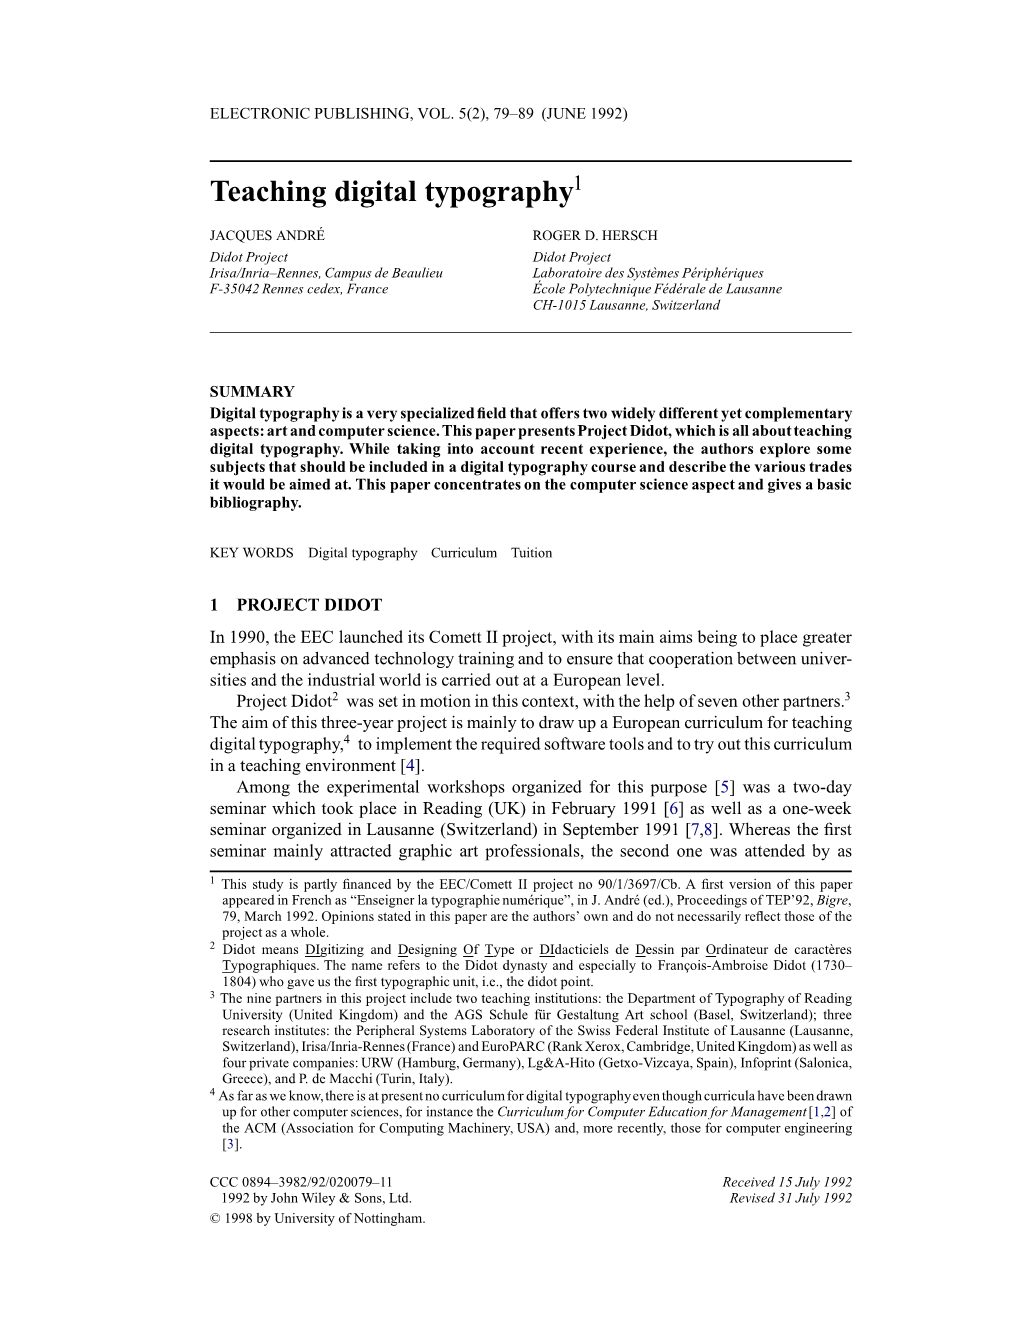 Teaching Digital Typography1